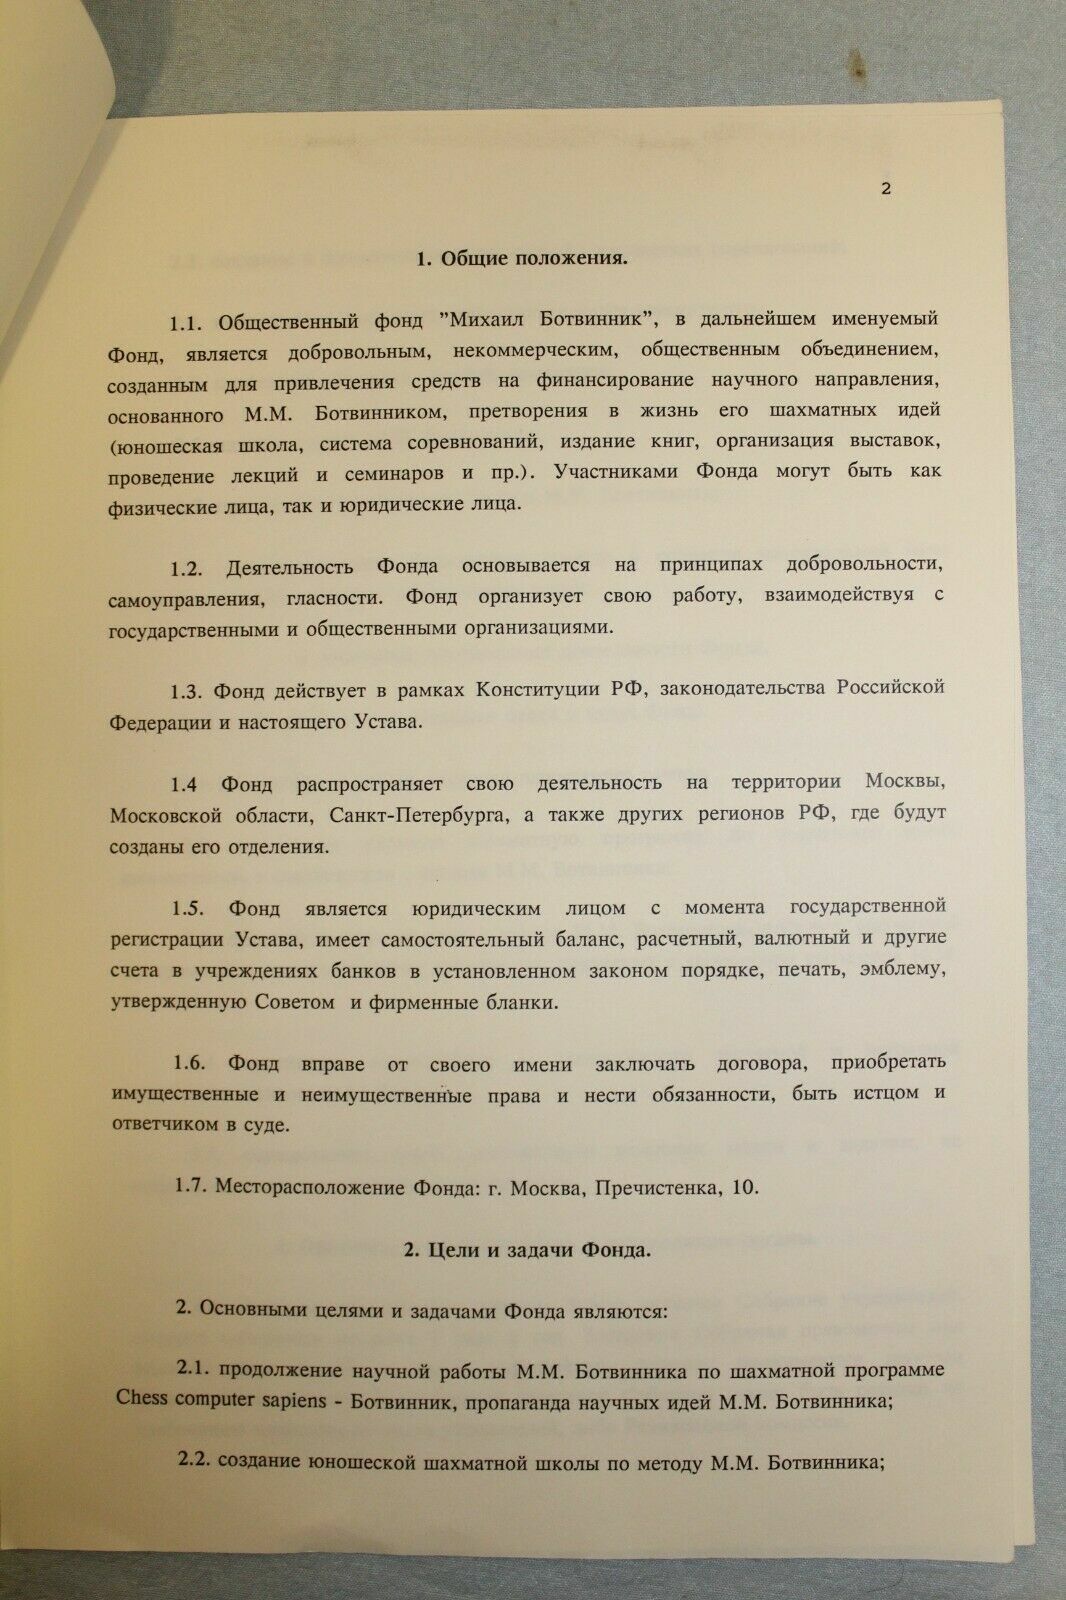 11266.Declaration and Articles of Association of M. Botvinniks fund. Signed by Karpov